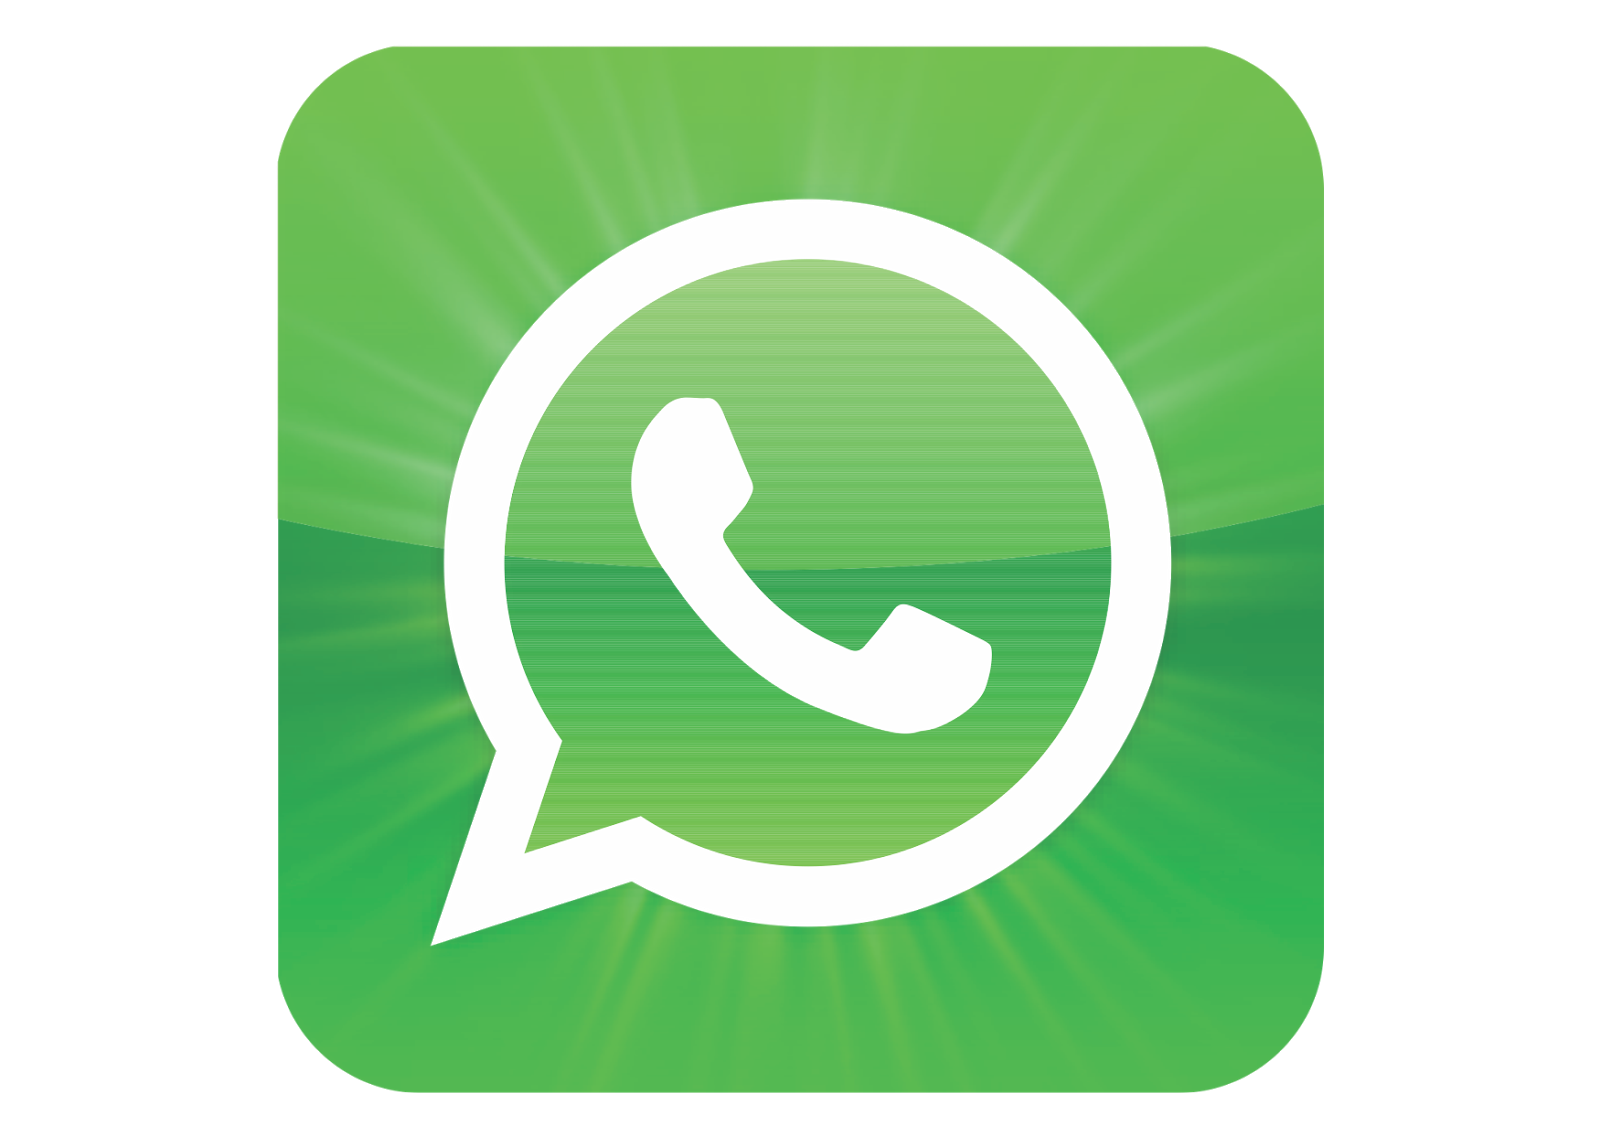 View 40 Whatsapp Logo Image